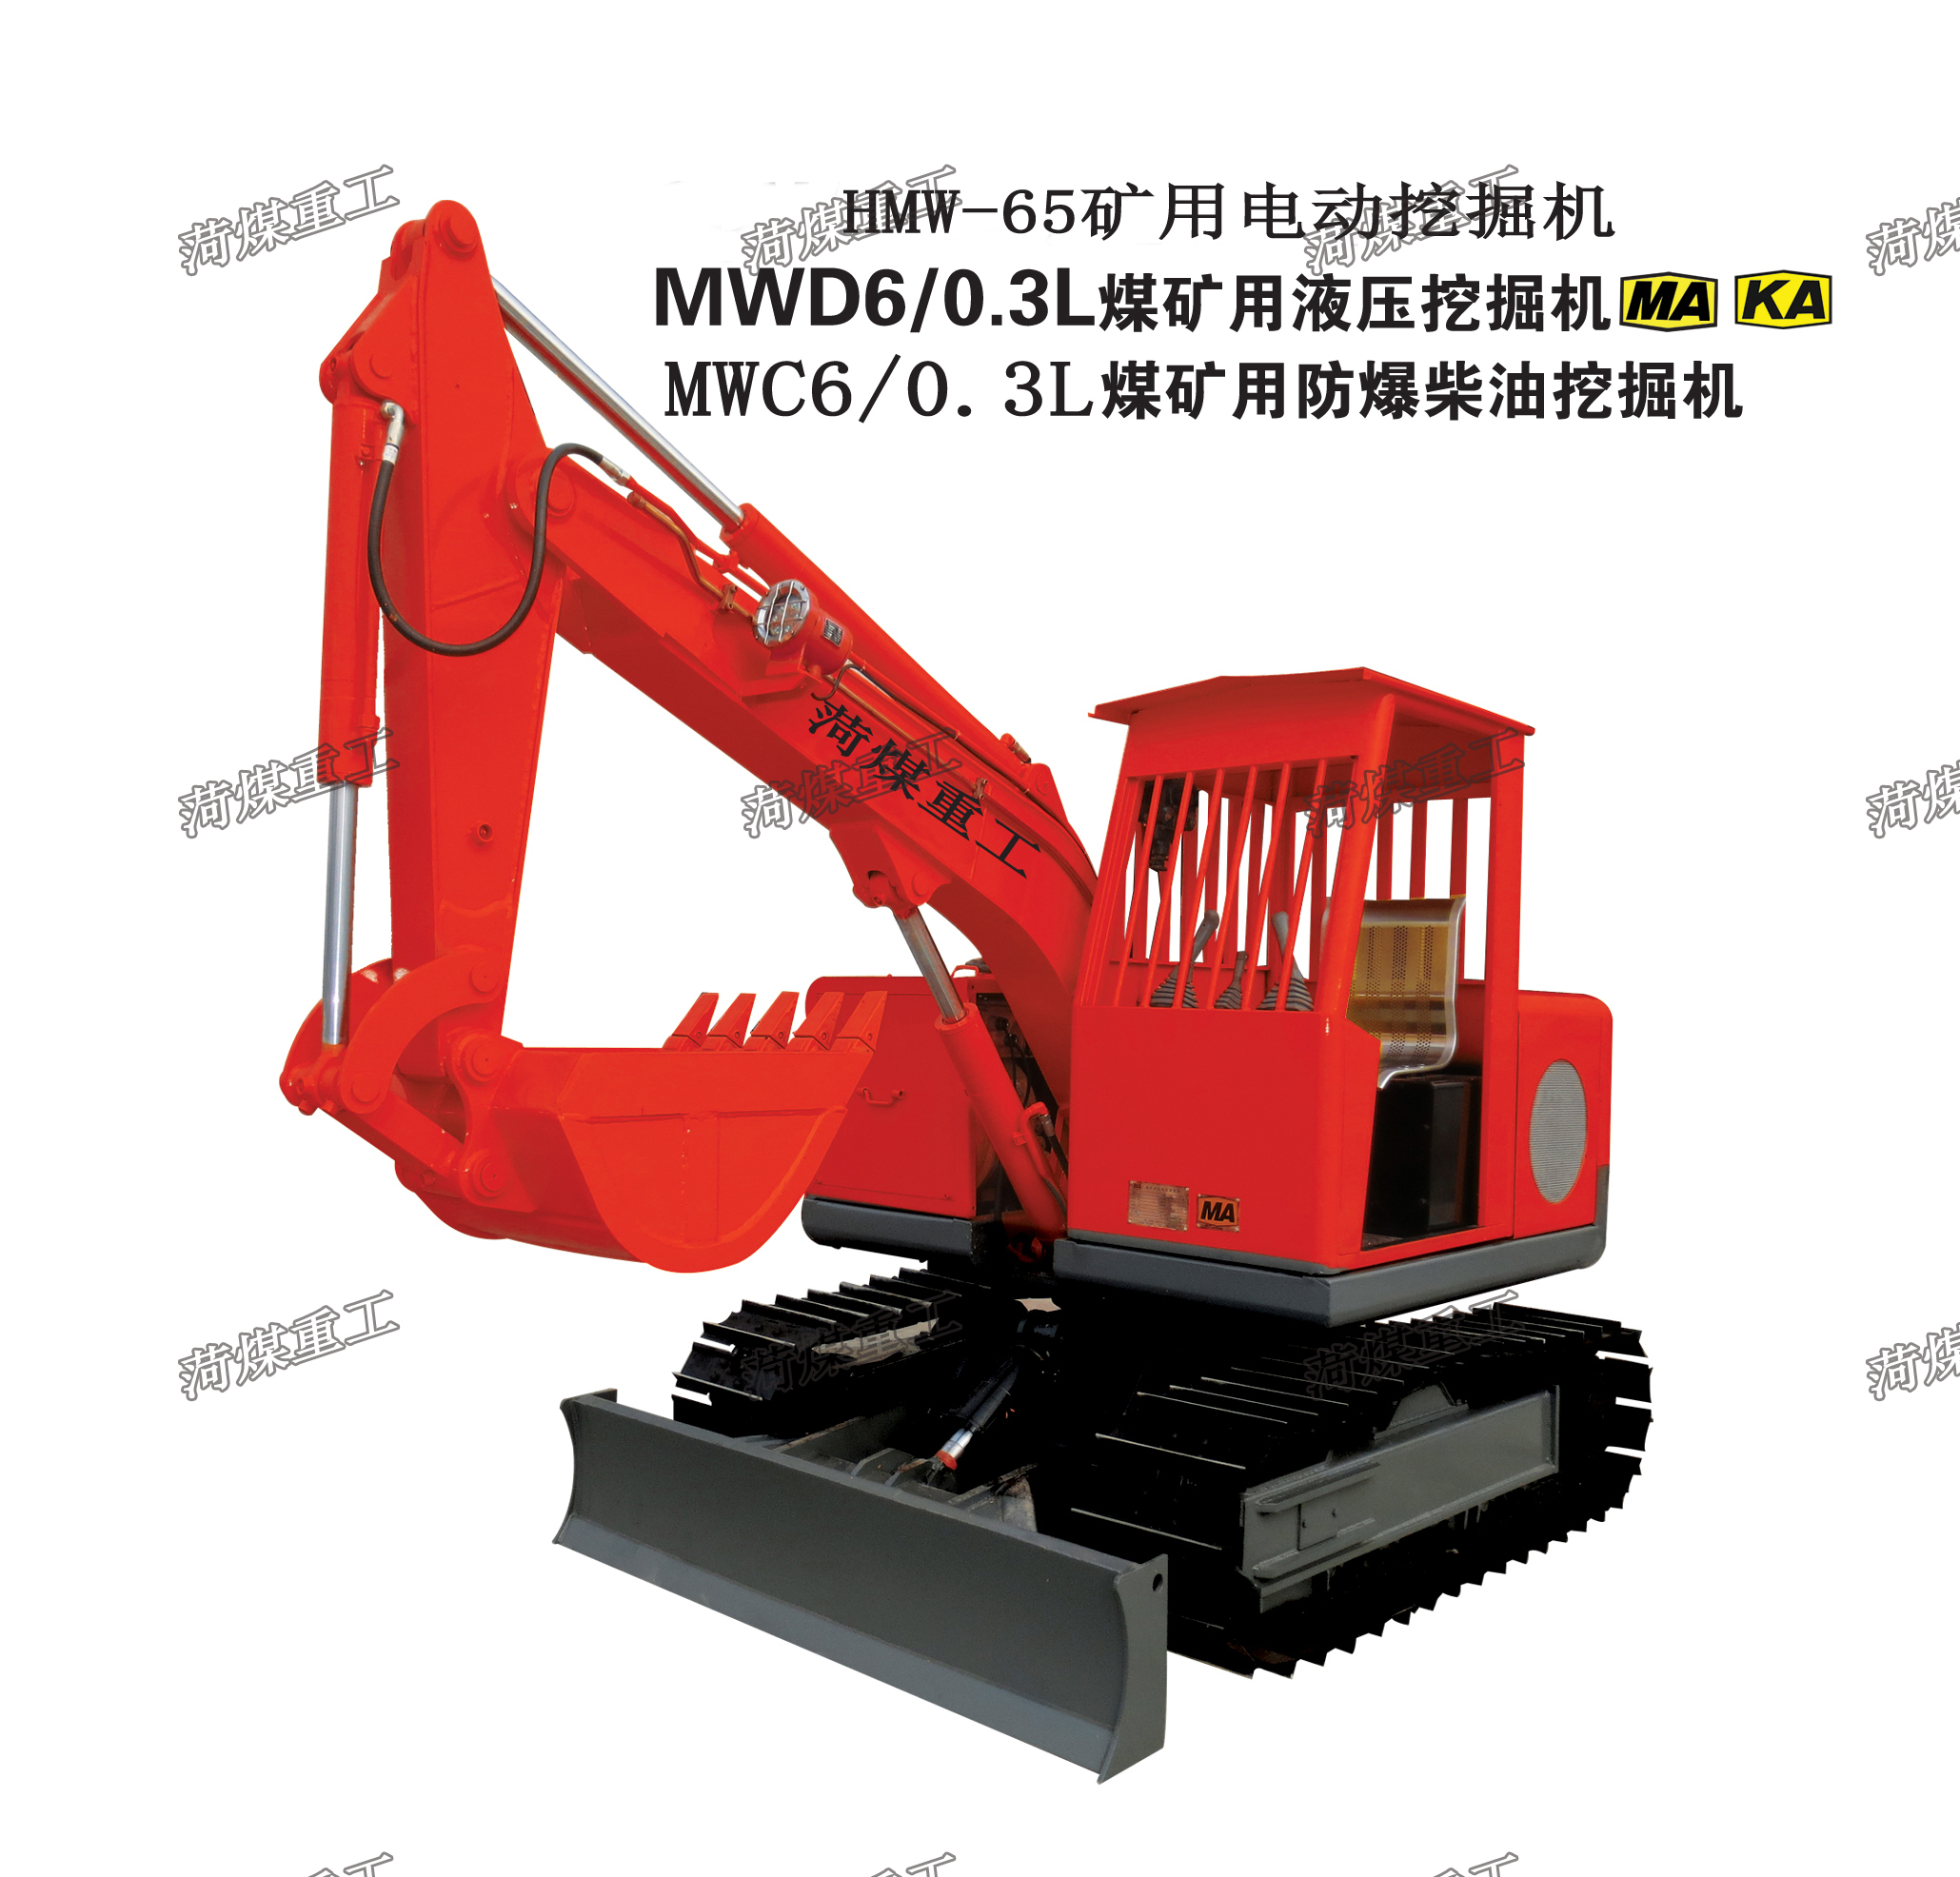 MWD6/0.3L煤矿用电动液压挖掘机